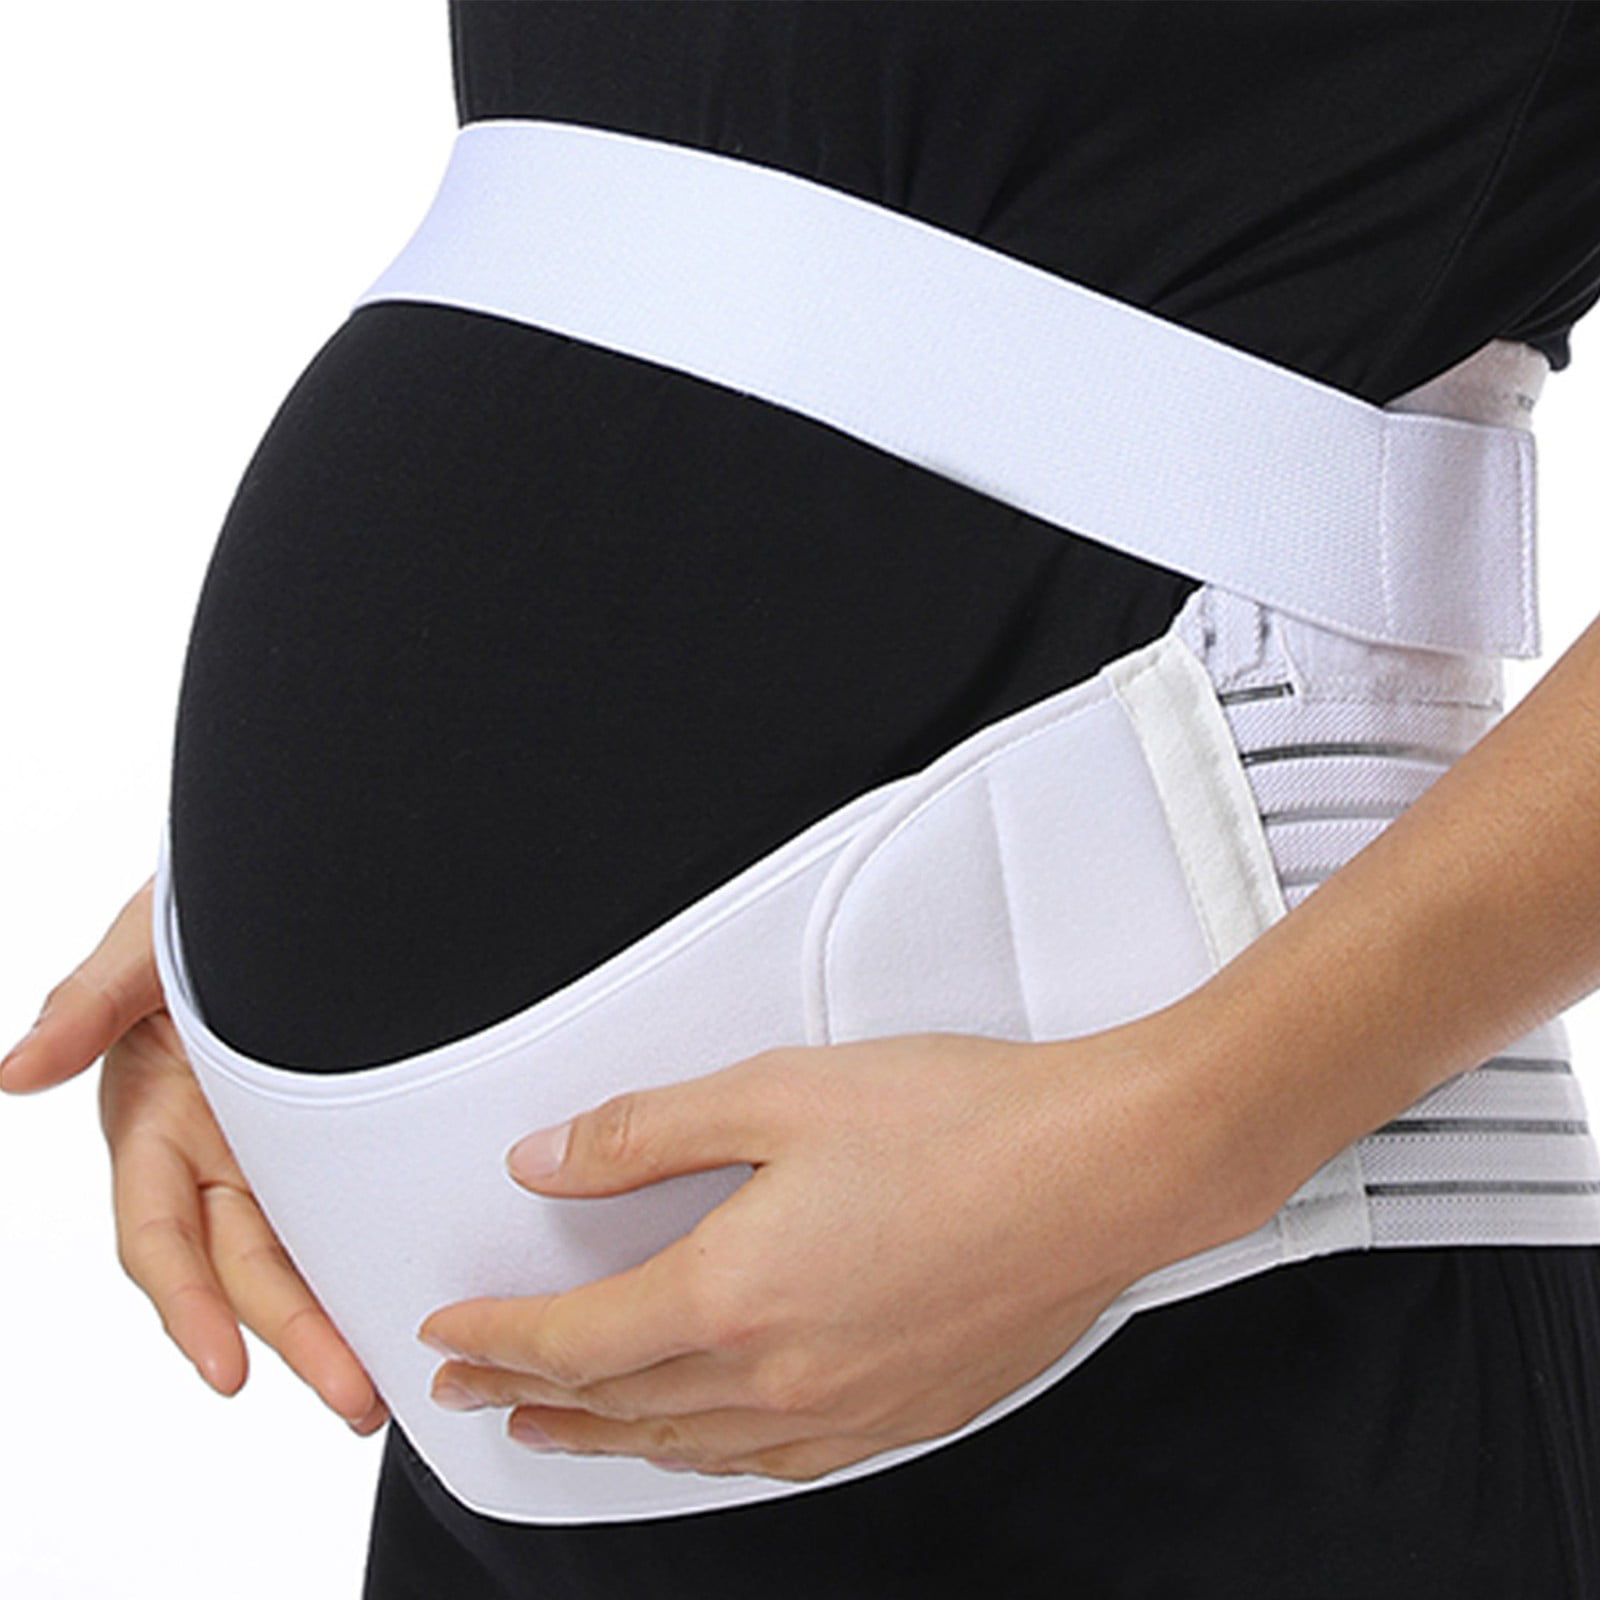 FITTOO Maternity Belt Back Support Belly Band Pregnancy Belt Support Brace Abdominal Binder Waist Support 